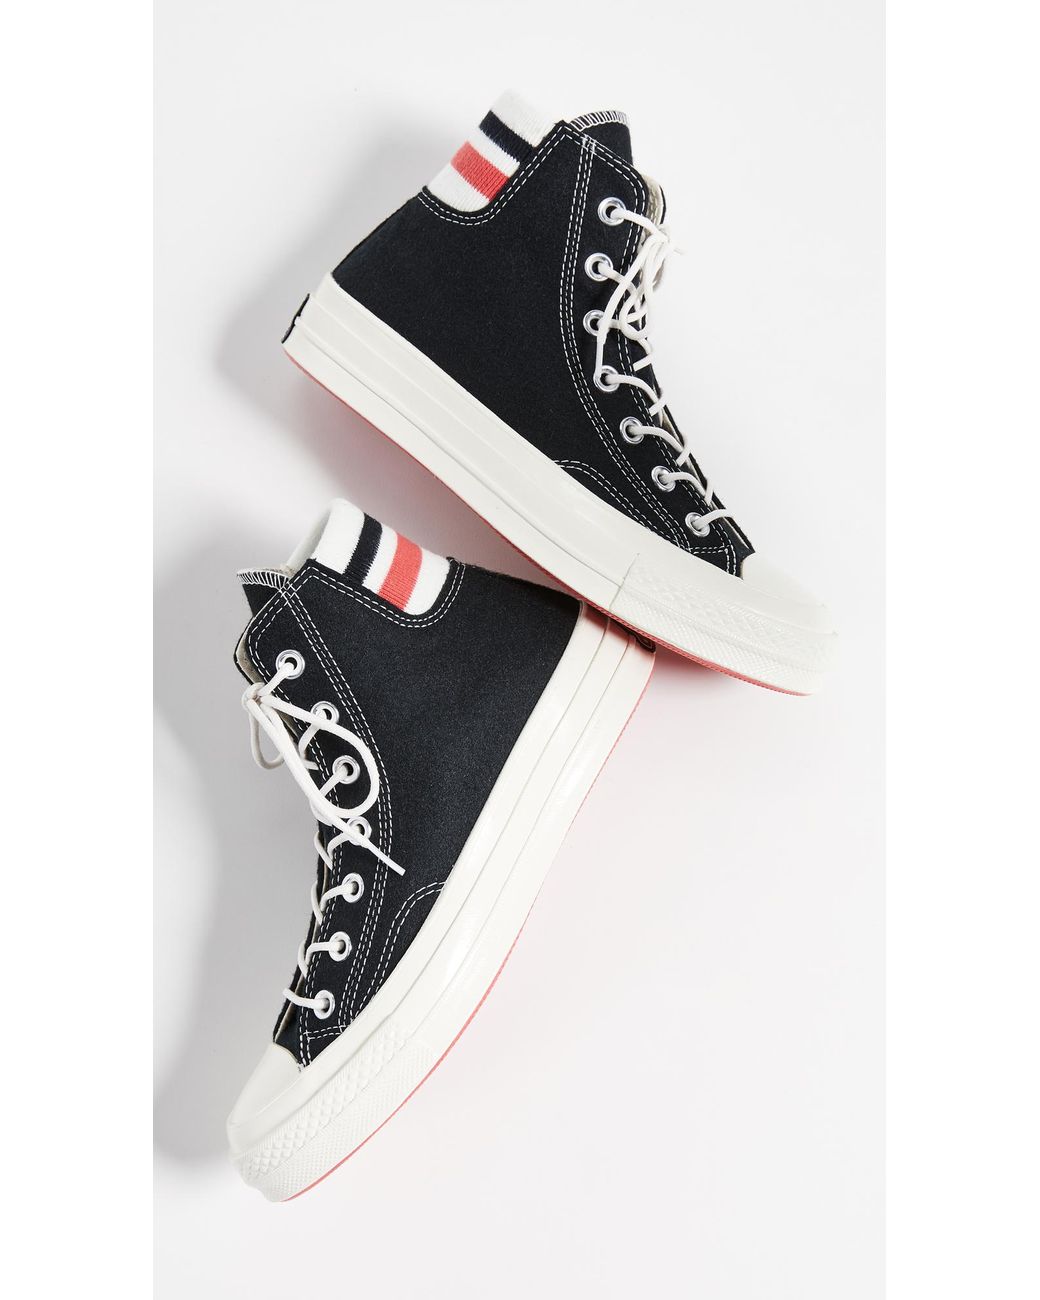 Converse Felt Chuck 70 Retro Stripe High Top Sneakers in Black/Red (Black)  | Lyst